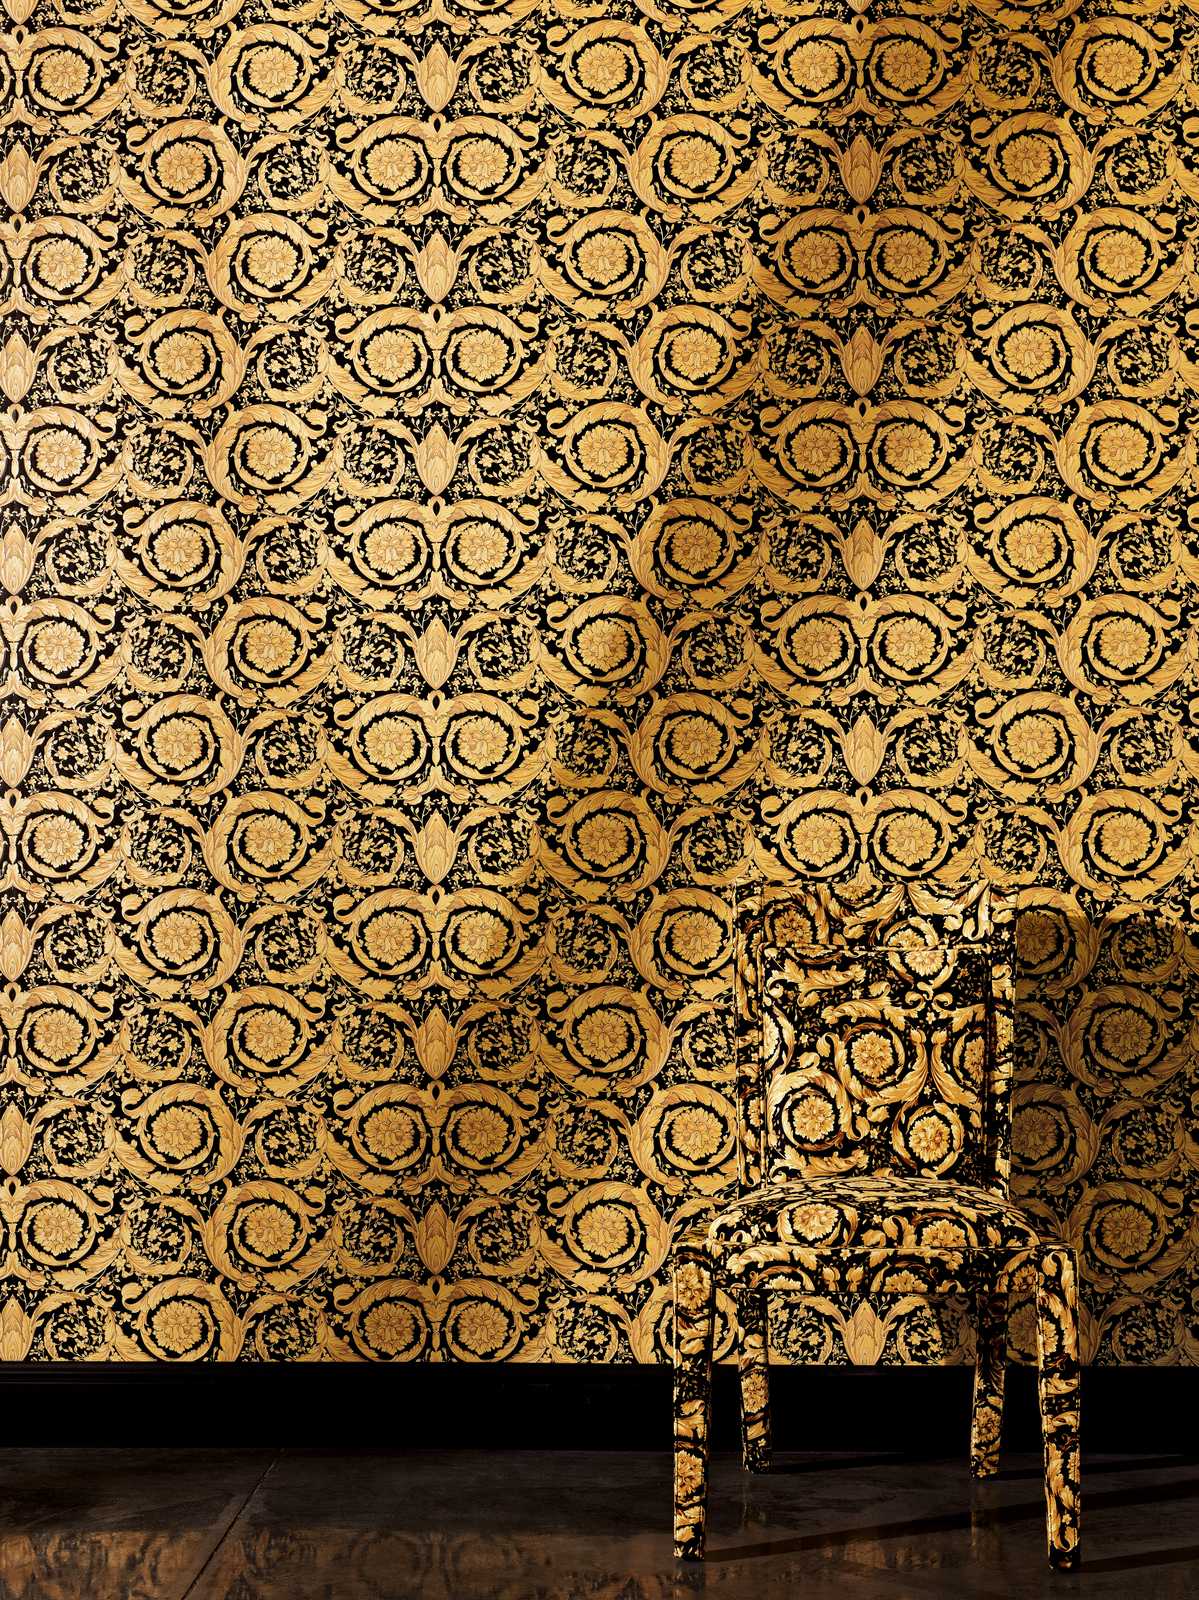             Papel pintado VERSACE con motivo floral ornamental - oro, negro
        